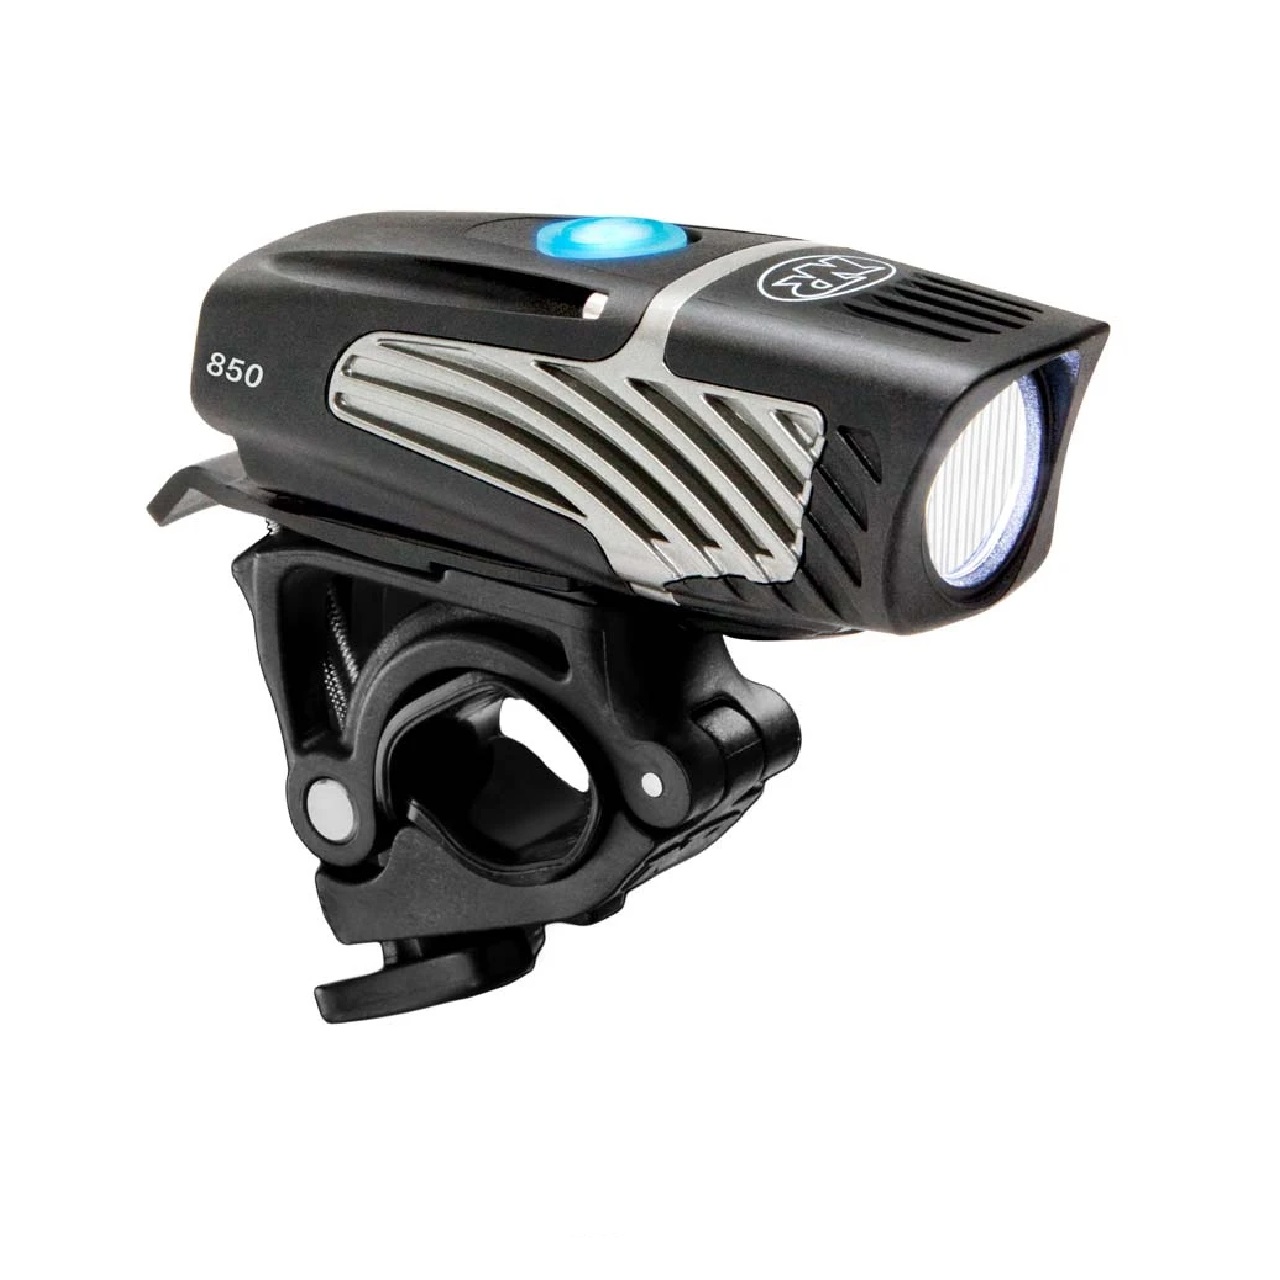 NiteRider Lumina Micro 850 Front Bike Light Cycling Light 6783